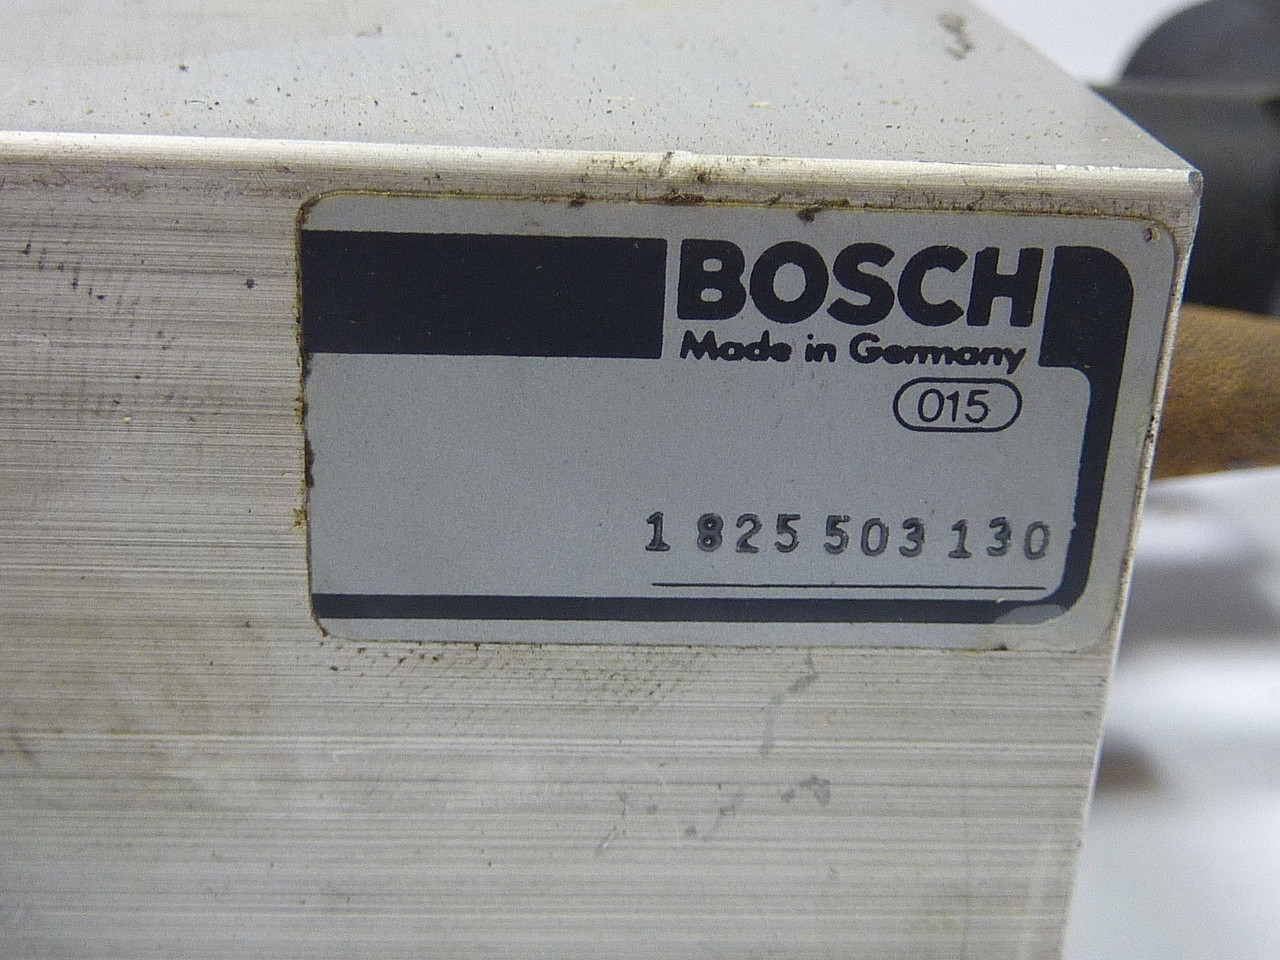 Bosch 1-825-503-130 Valve Manifold Subplate USED